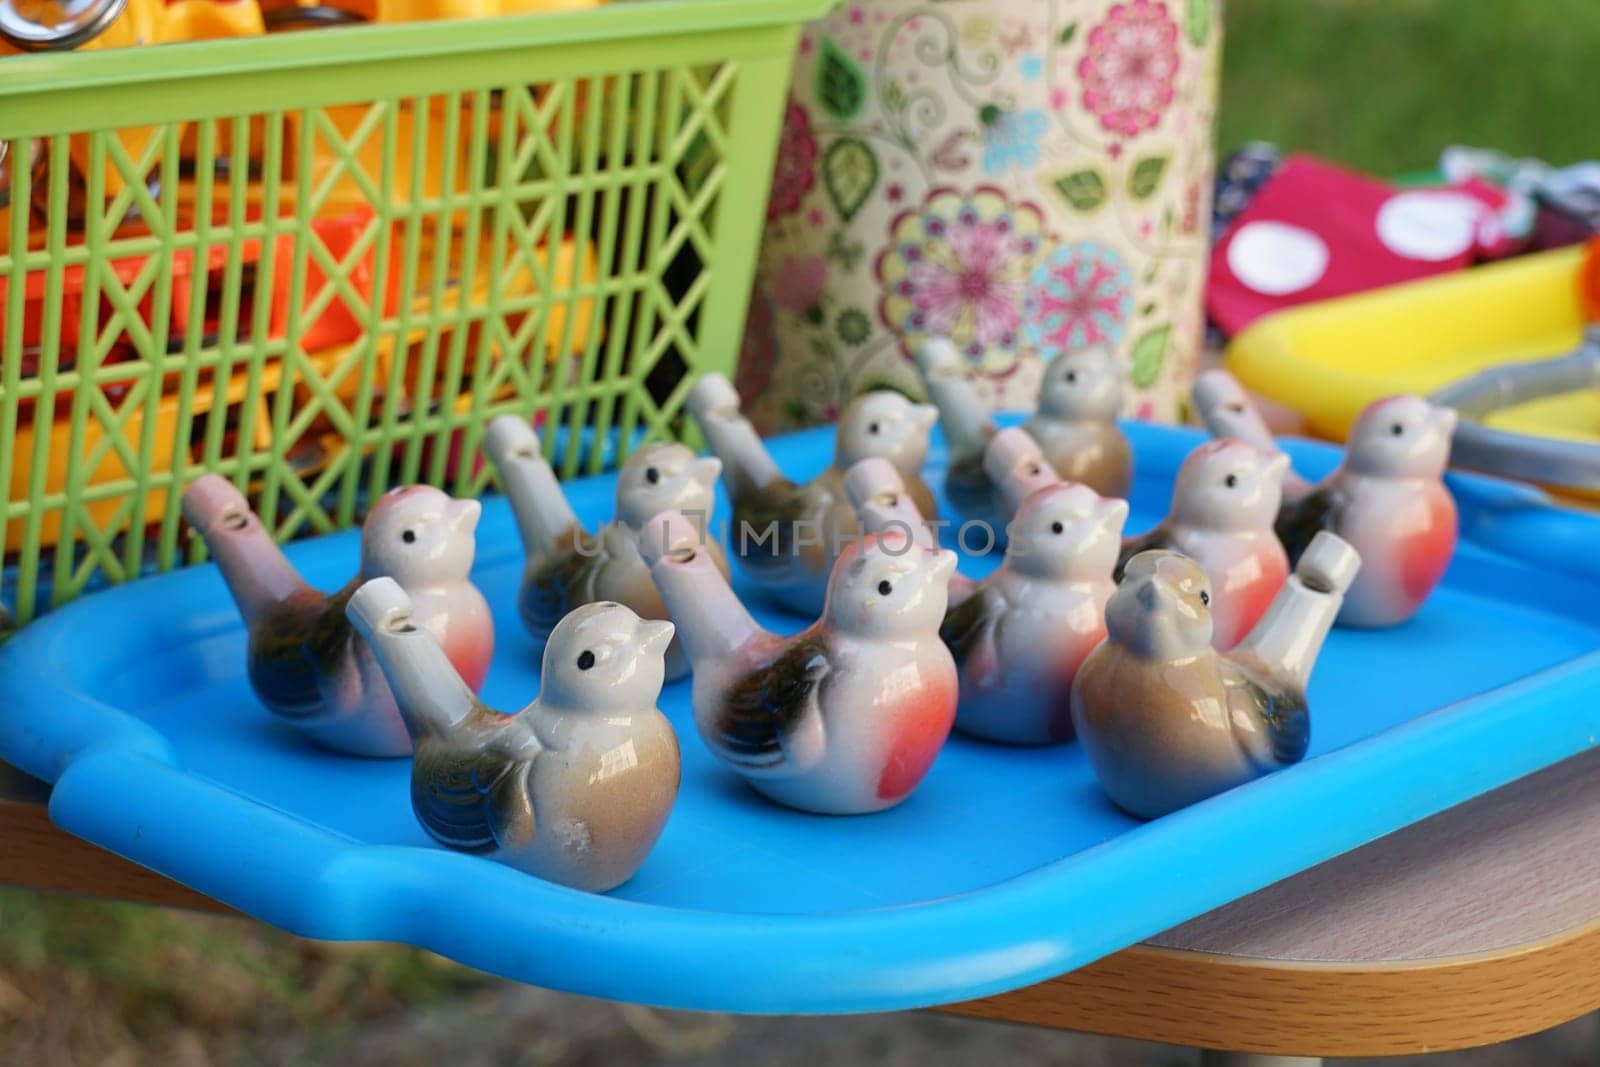 Many children's ceramic whistles in the shape of a bird on a tray by Serhii_Voroshchuk